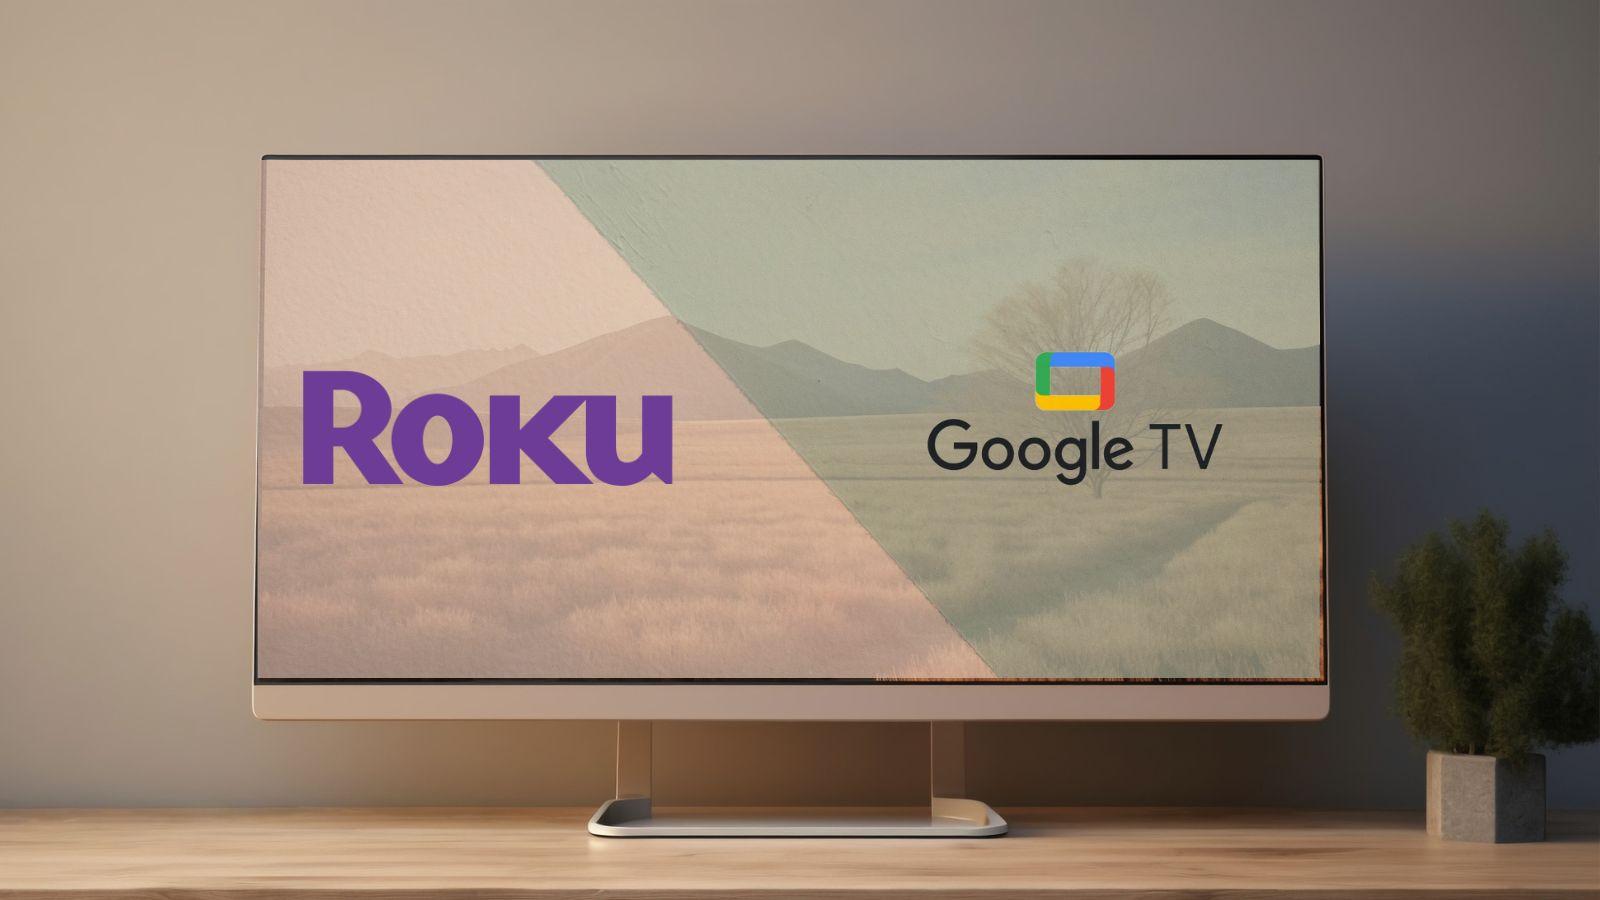 Google TV vs Roku